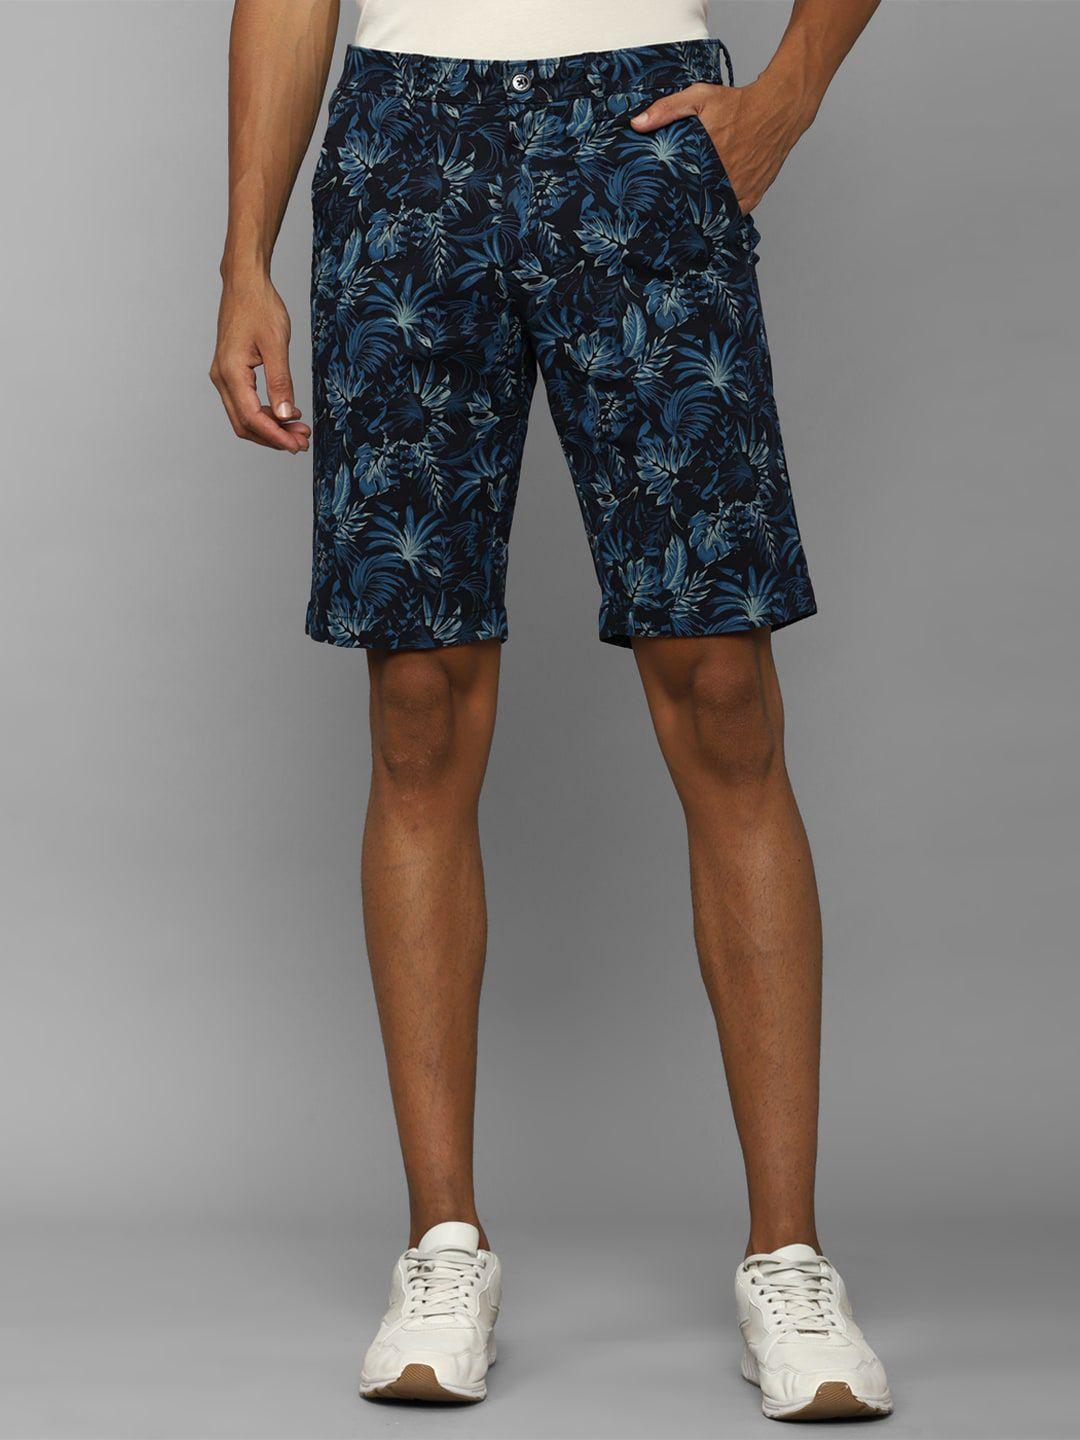 allen solly men floral printed slim fit pure cotton shorts